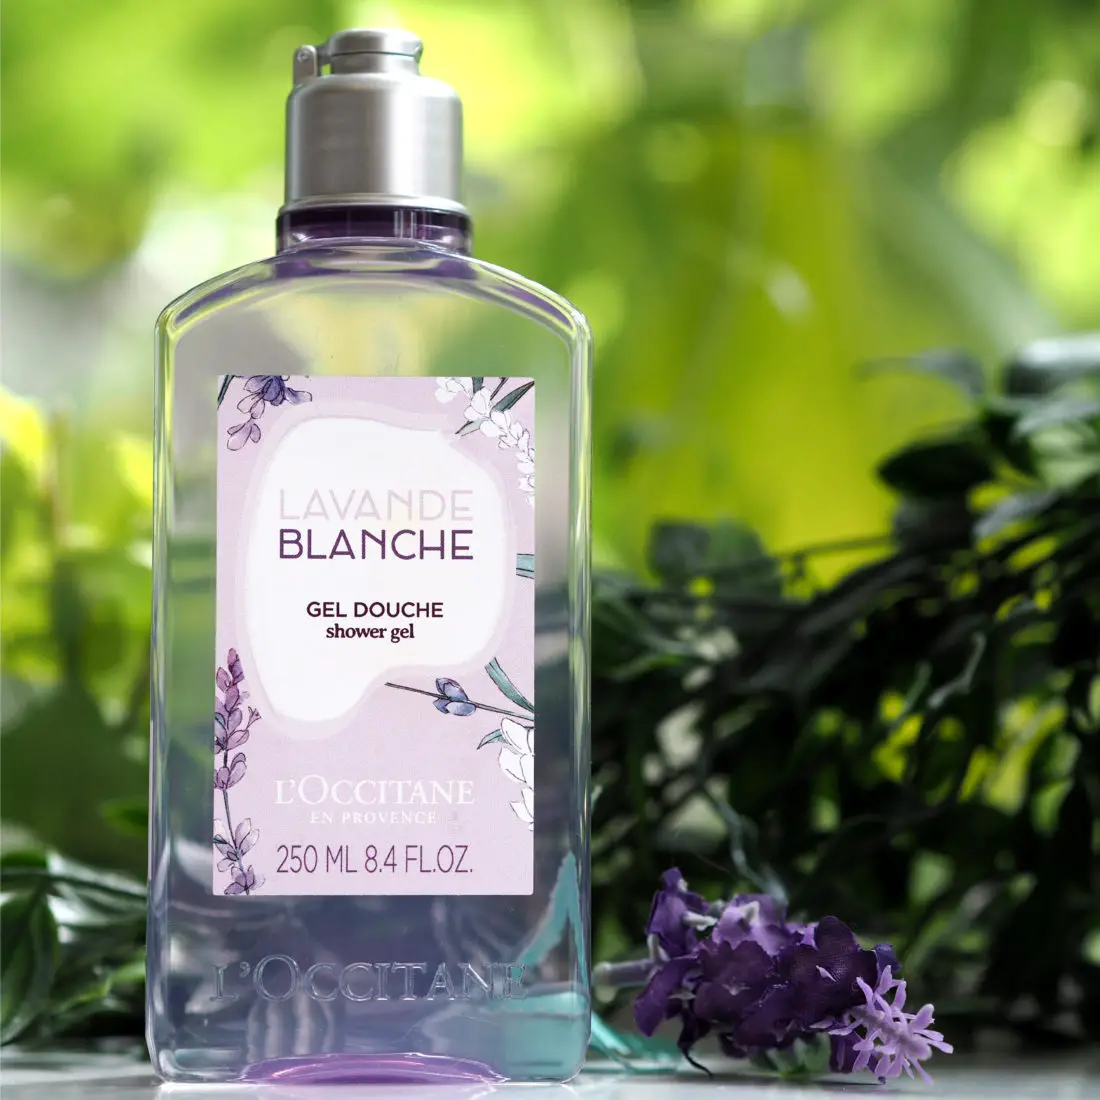 L'Occitane Lavende Blanche Shower Gel | British Beauty Blogger